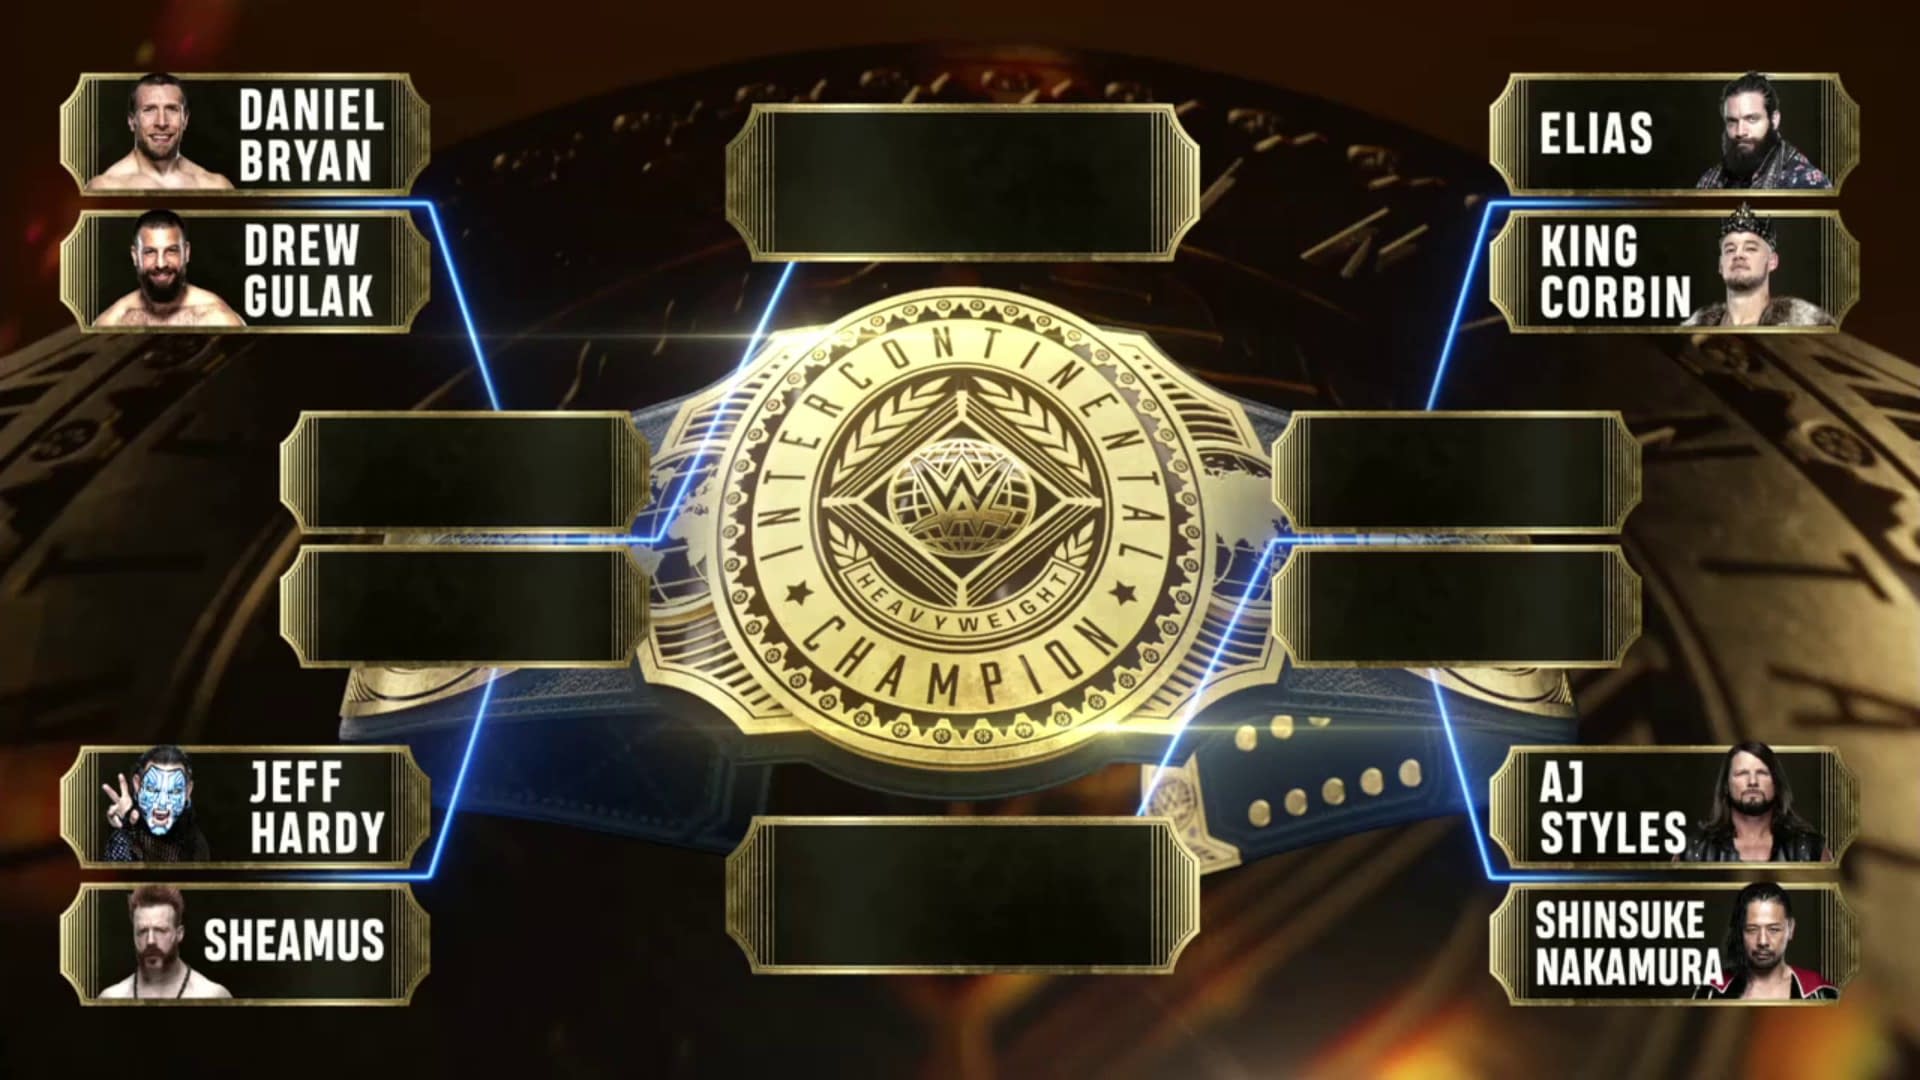 Elias Daniel Bryan Advance In Wwe Intercontinental Title Tournament